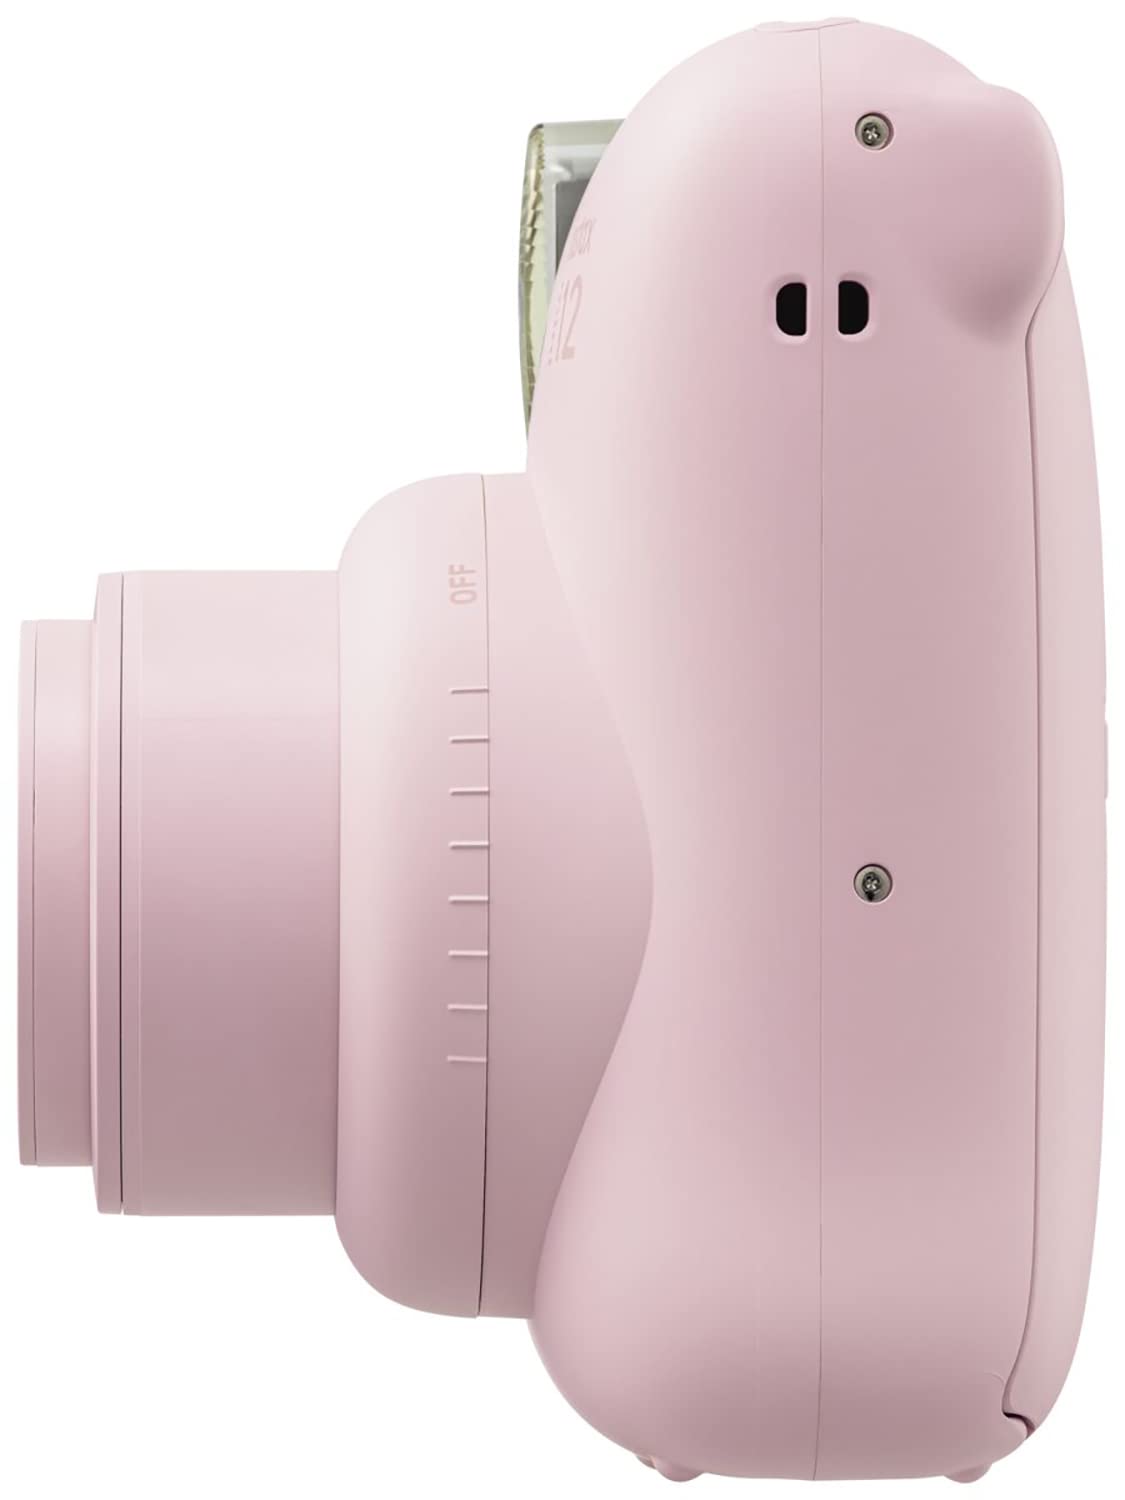 Fujifilm Instax Mini 12 Instant Camera - Blossom Pink, compact